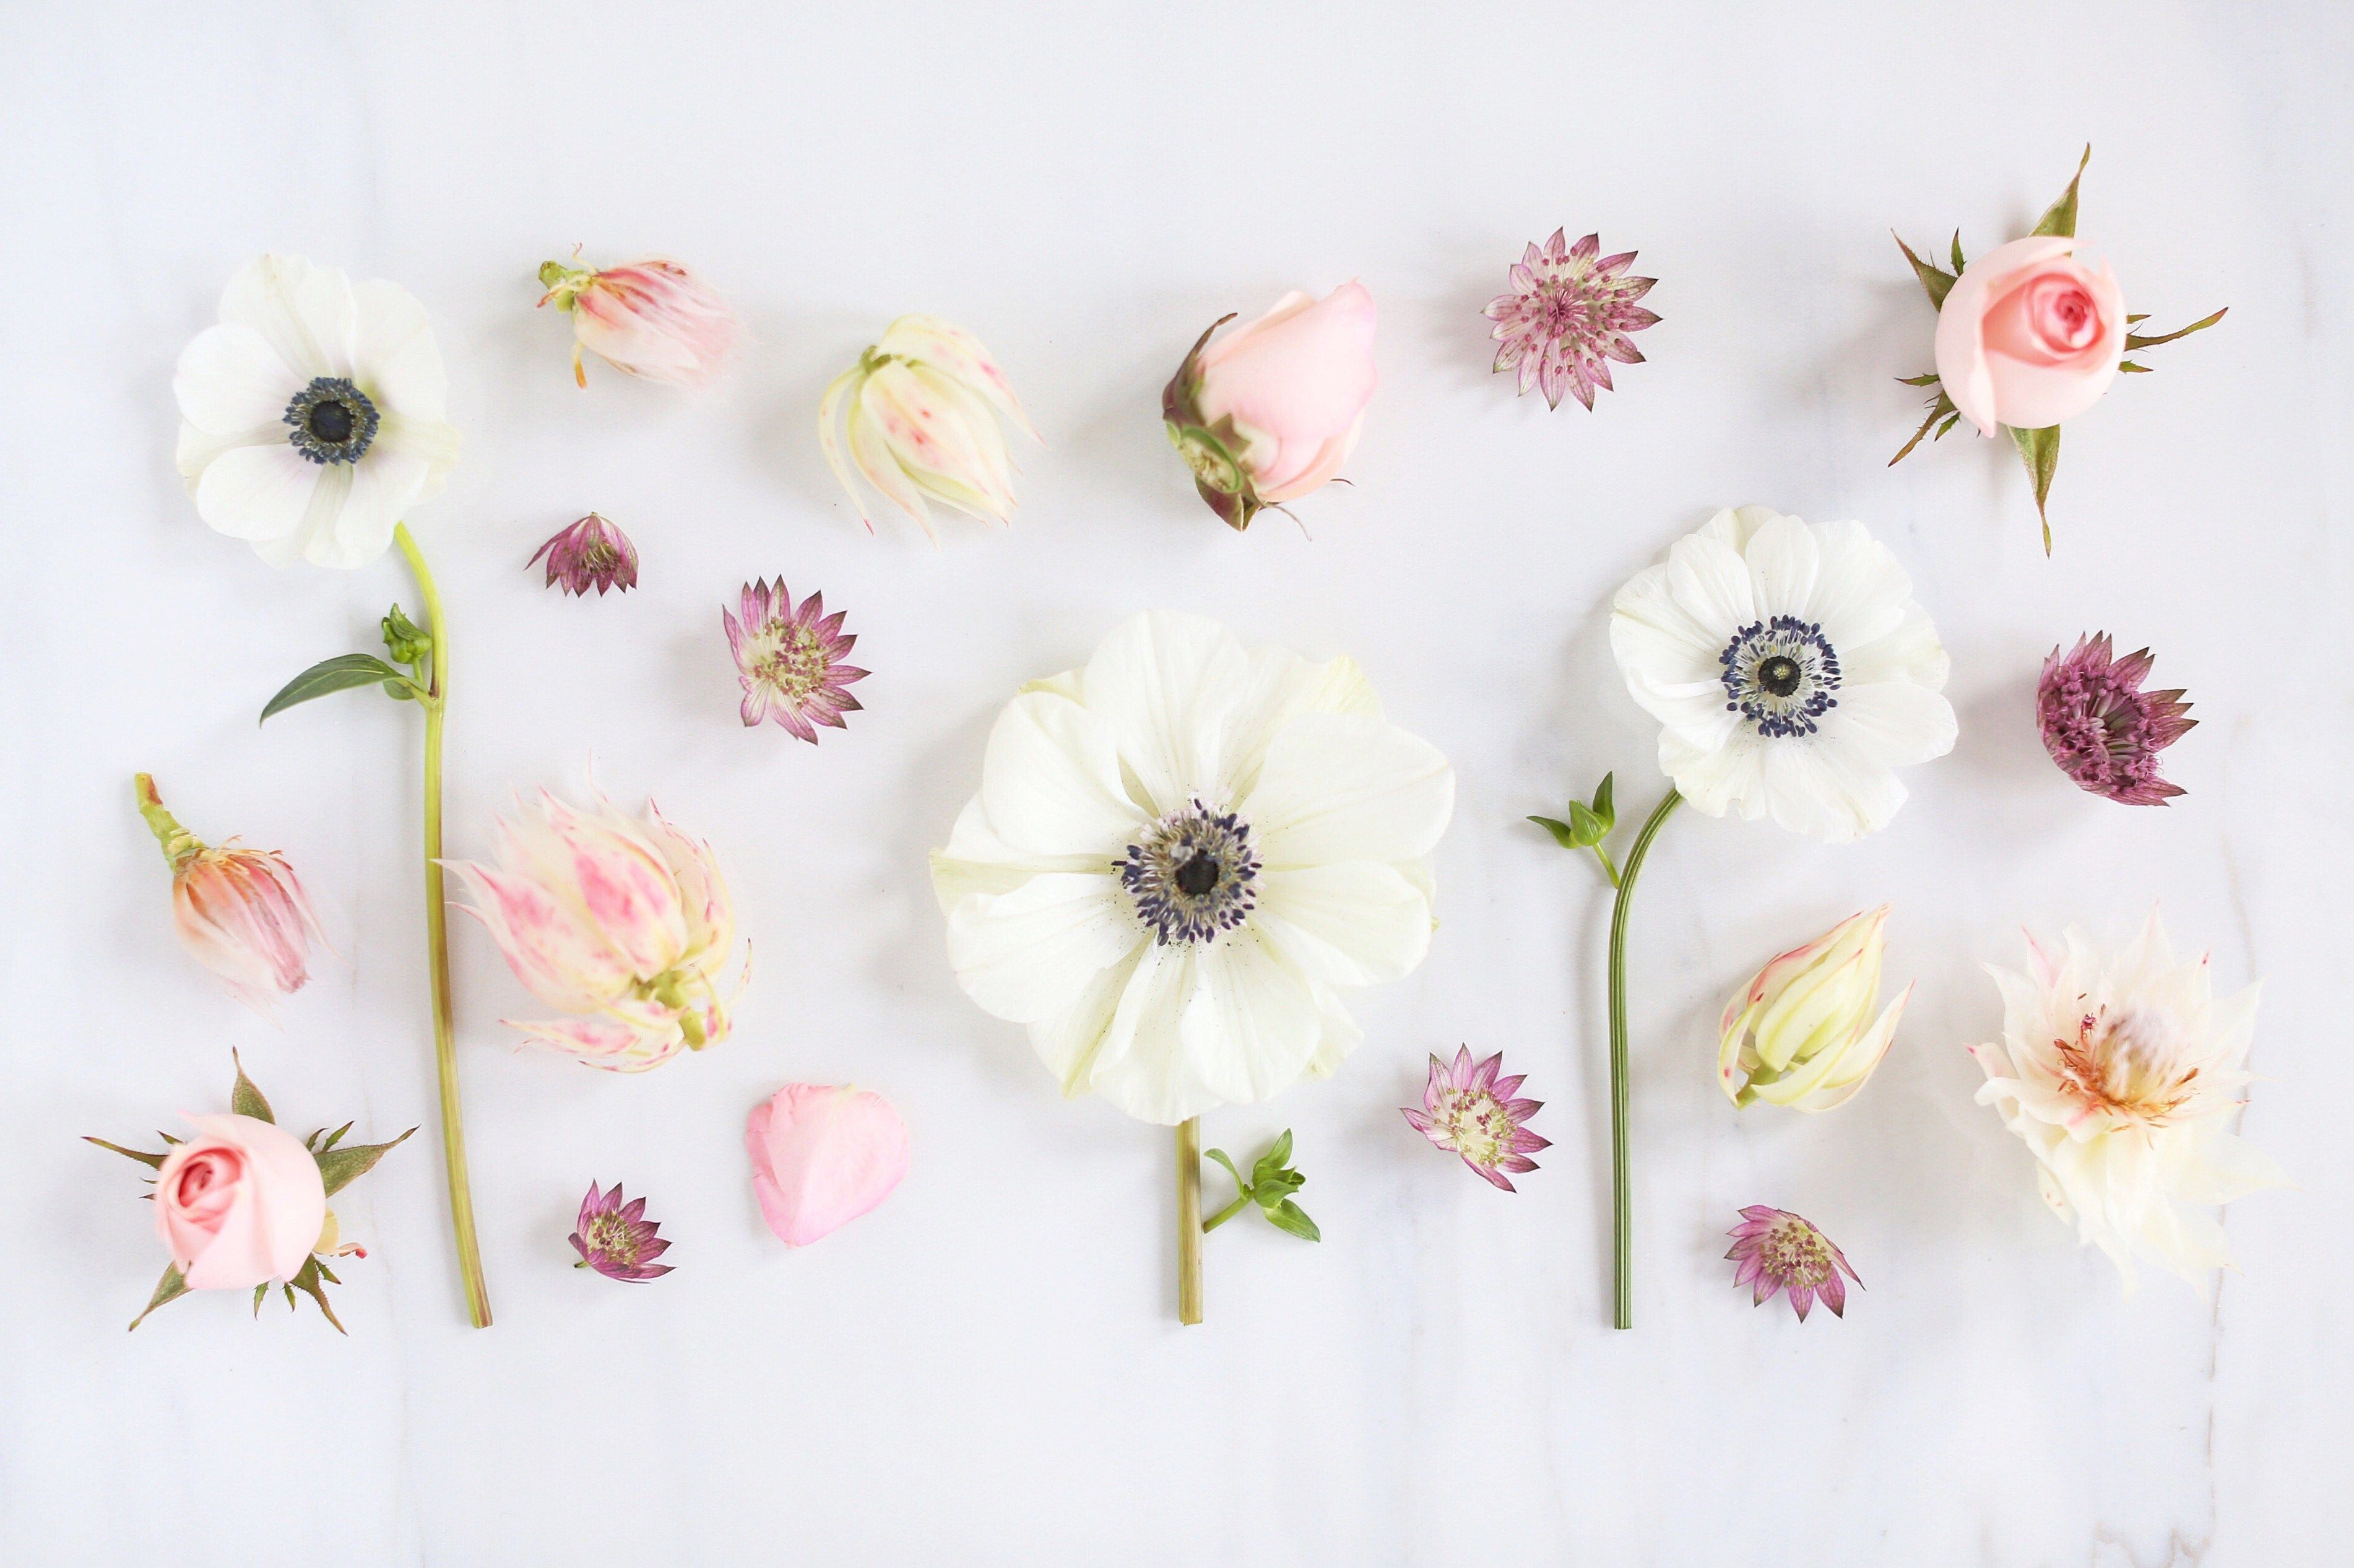 A flat lay of flowers on a white background - Blush, pastel minimalist, February